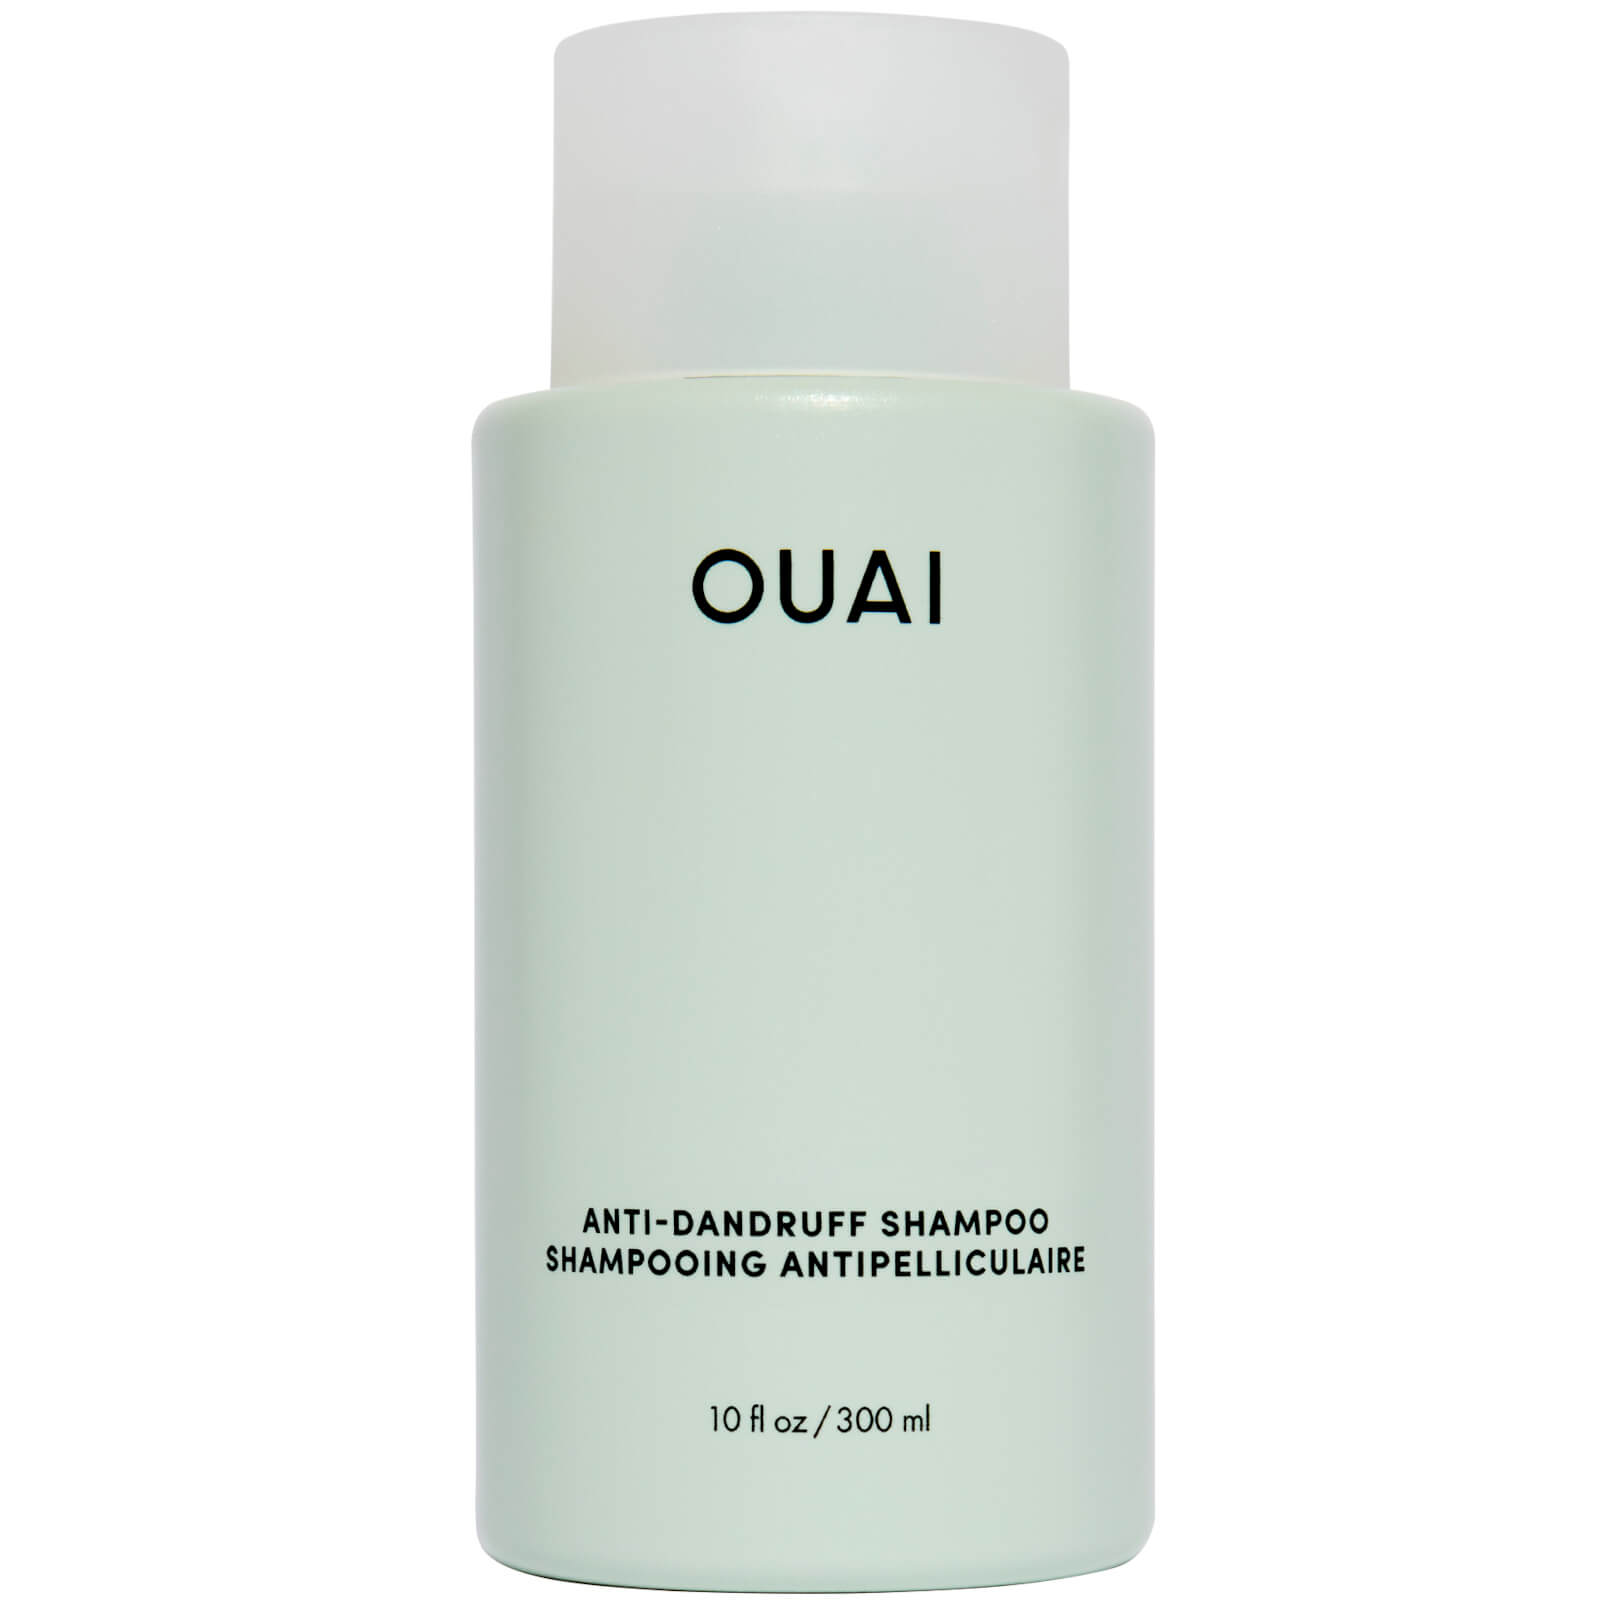 Ouai Anti-dandruff Shampoo 300ml In Green